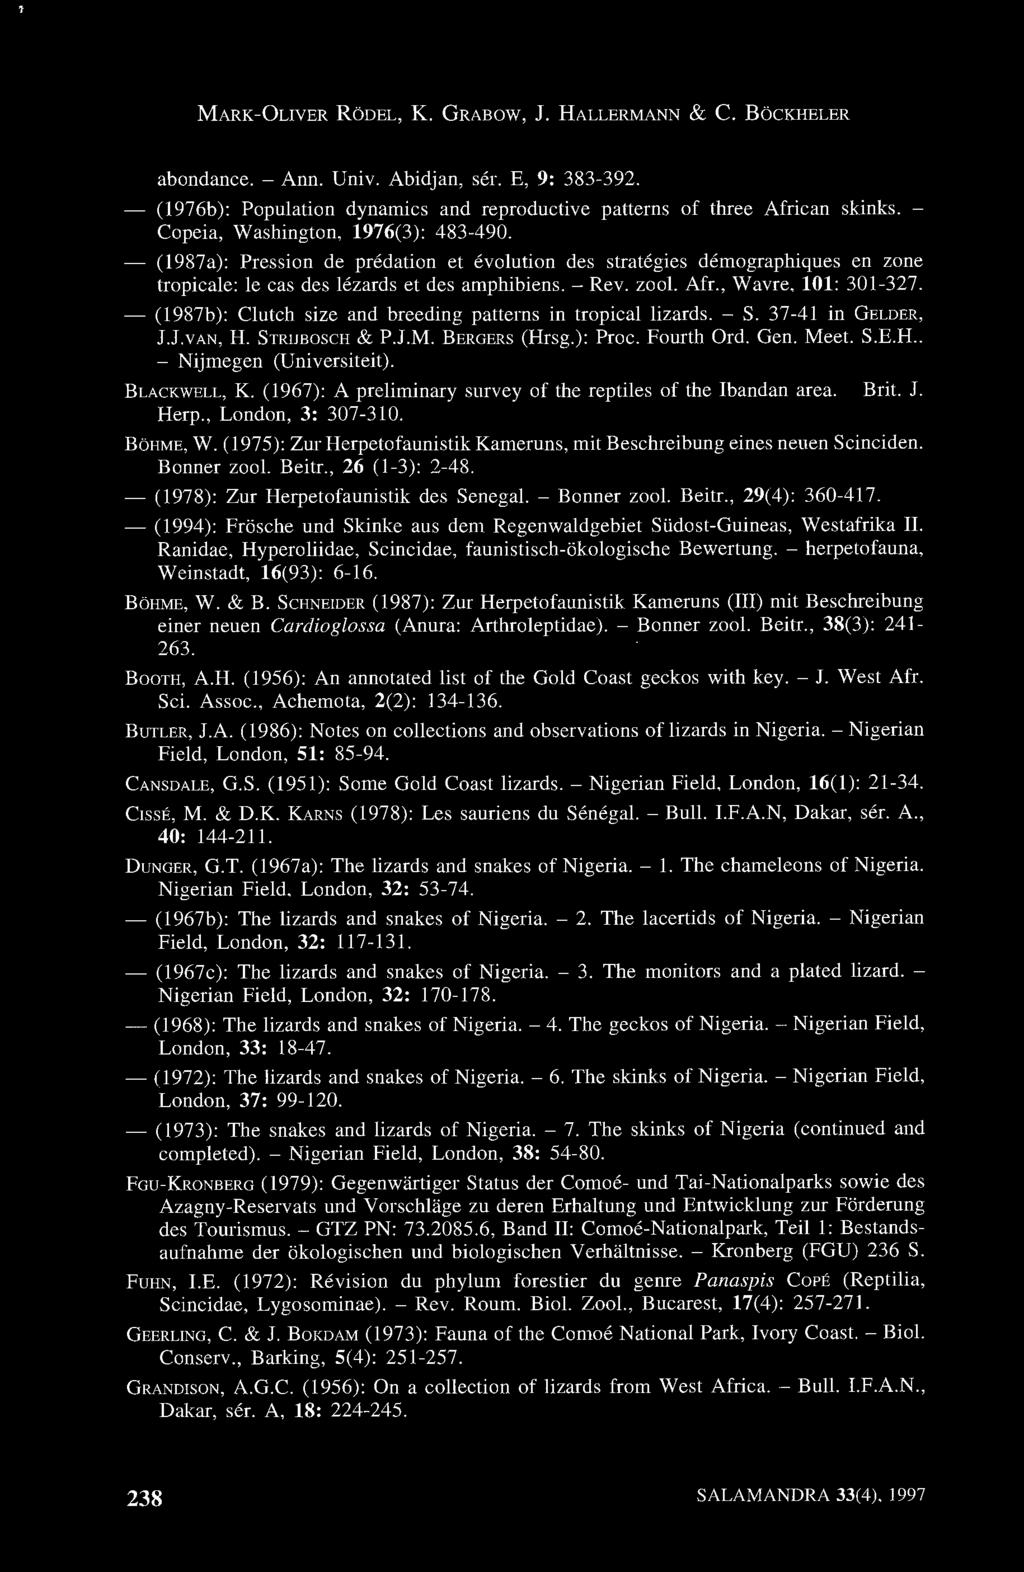 , Wavre, 101: 301-327. - (1987b): Clutch size and breeding patterns in tropical lizards. - S. 37-41 in GELDER, J.J.VAN, H. STRJJB OSCH & P.J.M. BERGERS (Hrsg.): Proc. Fourth Ord. Gen. Meet. S.E.H.. - Nijmegen (Universiteit).